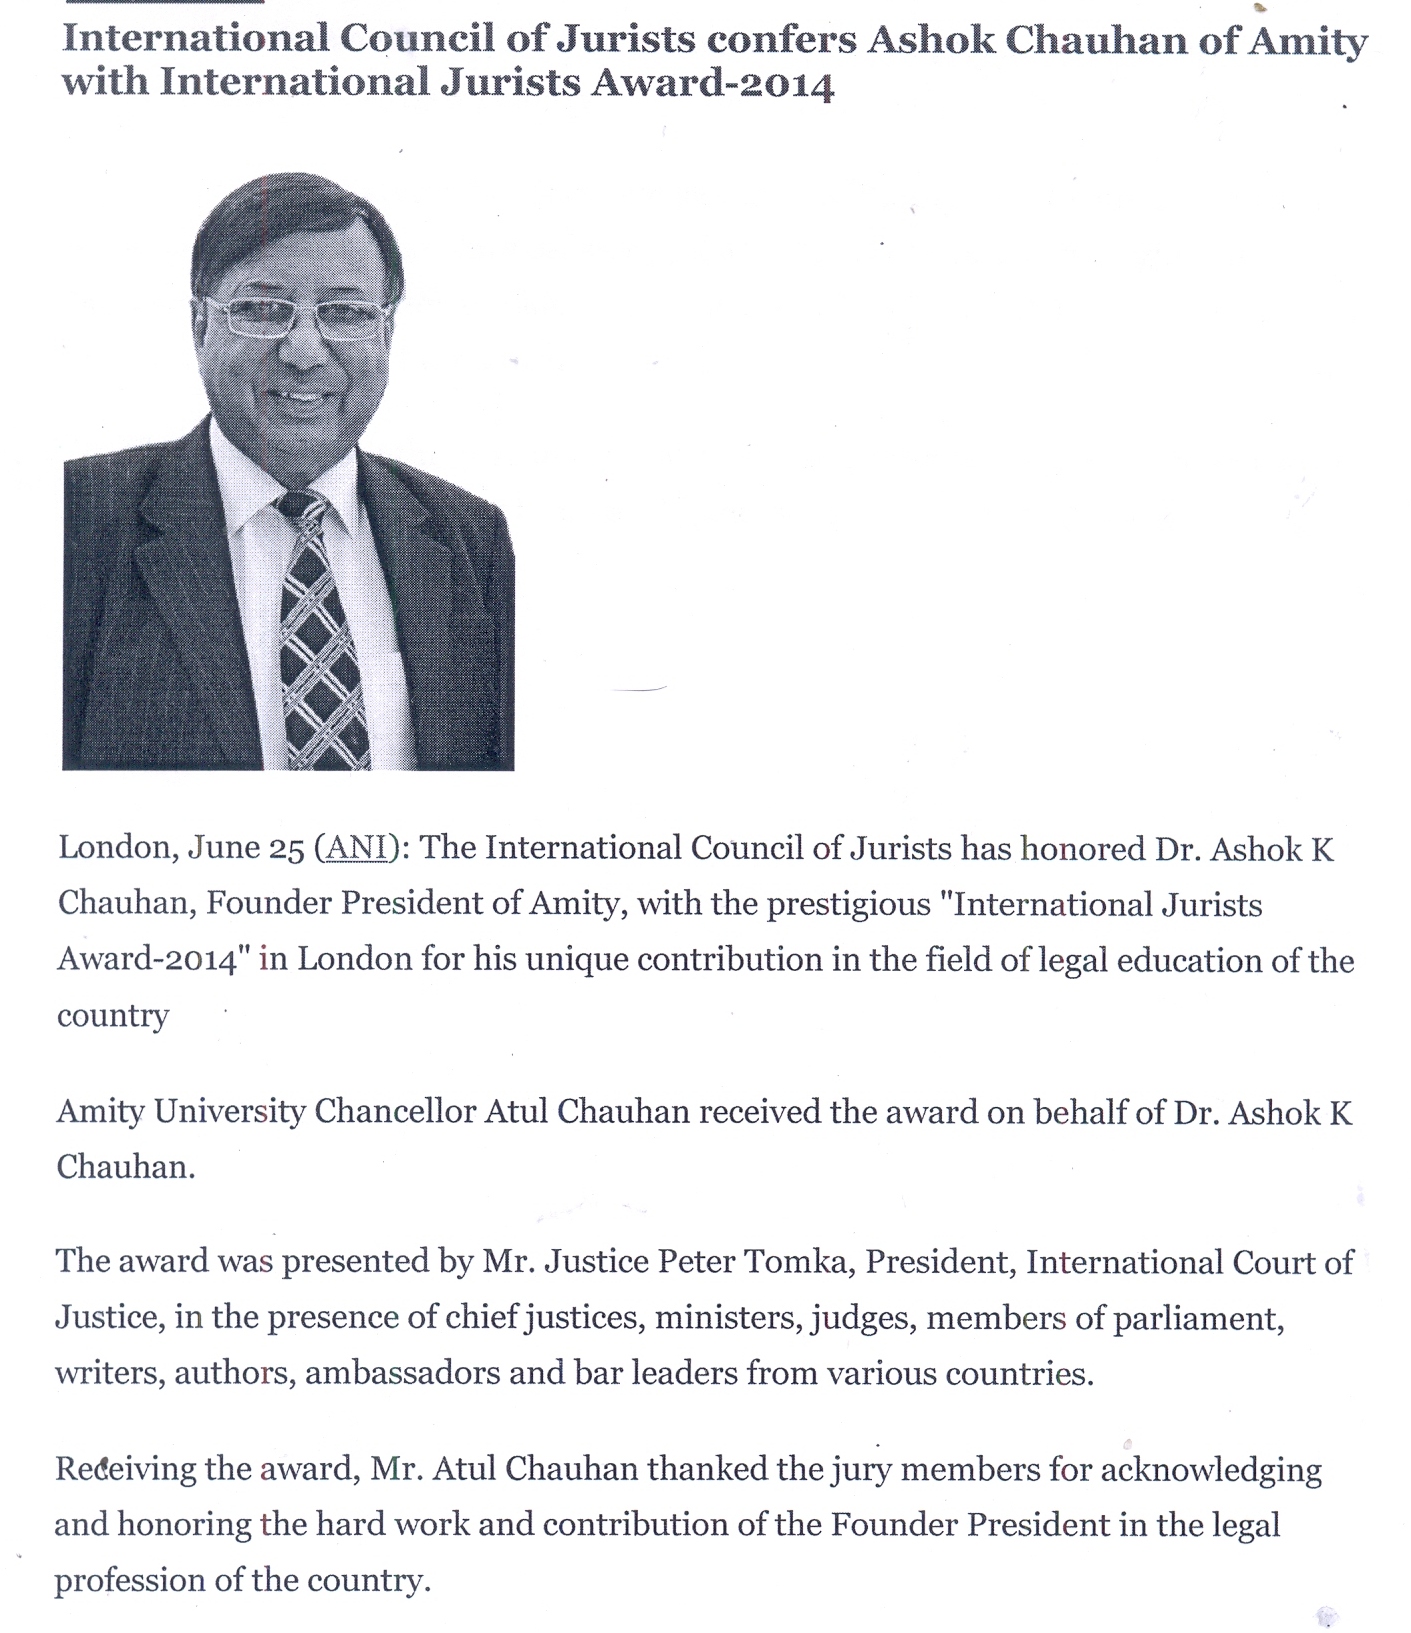 International Council of Jurists confers Ashok Chauhan of Amity with International Jurists Award